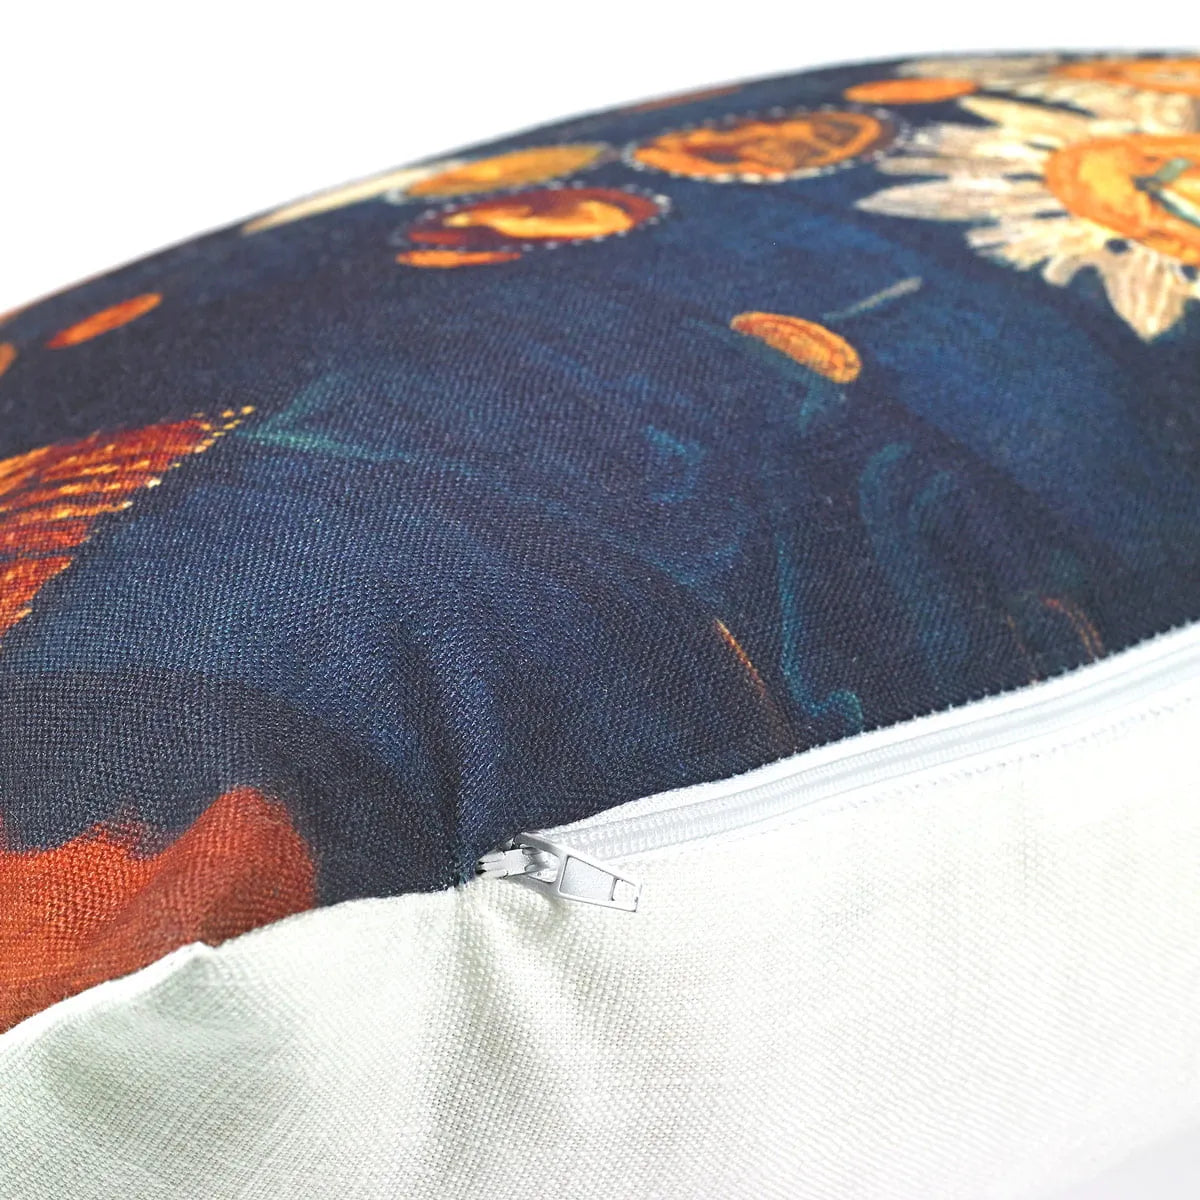 Fukusa And Carp In Waves - Meiji Period Art Pillow - Throw Pillows - Aesthetic Art